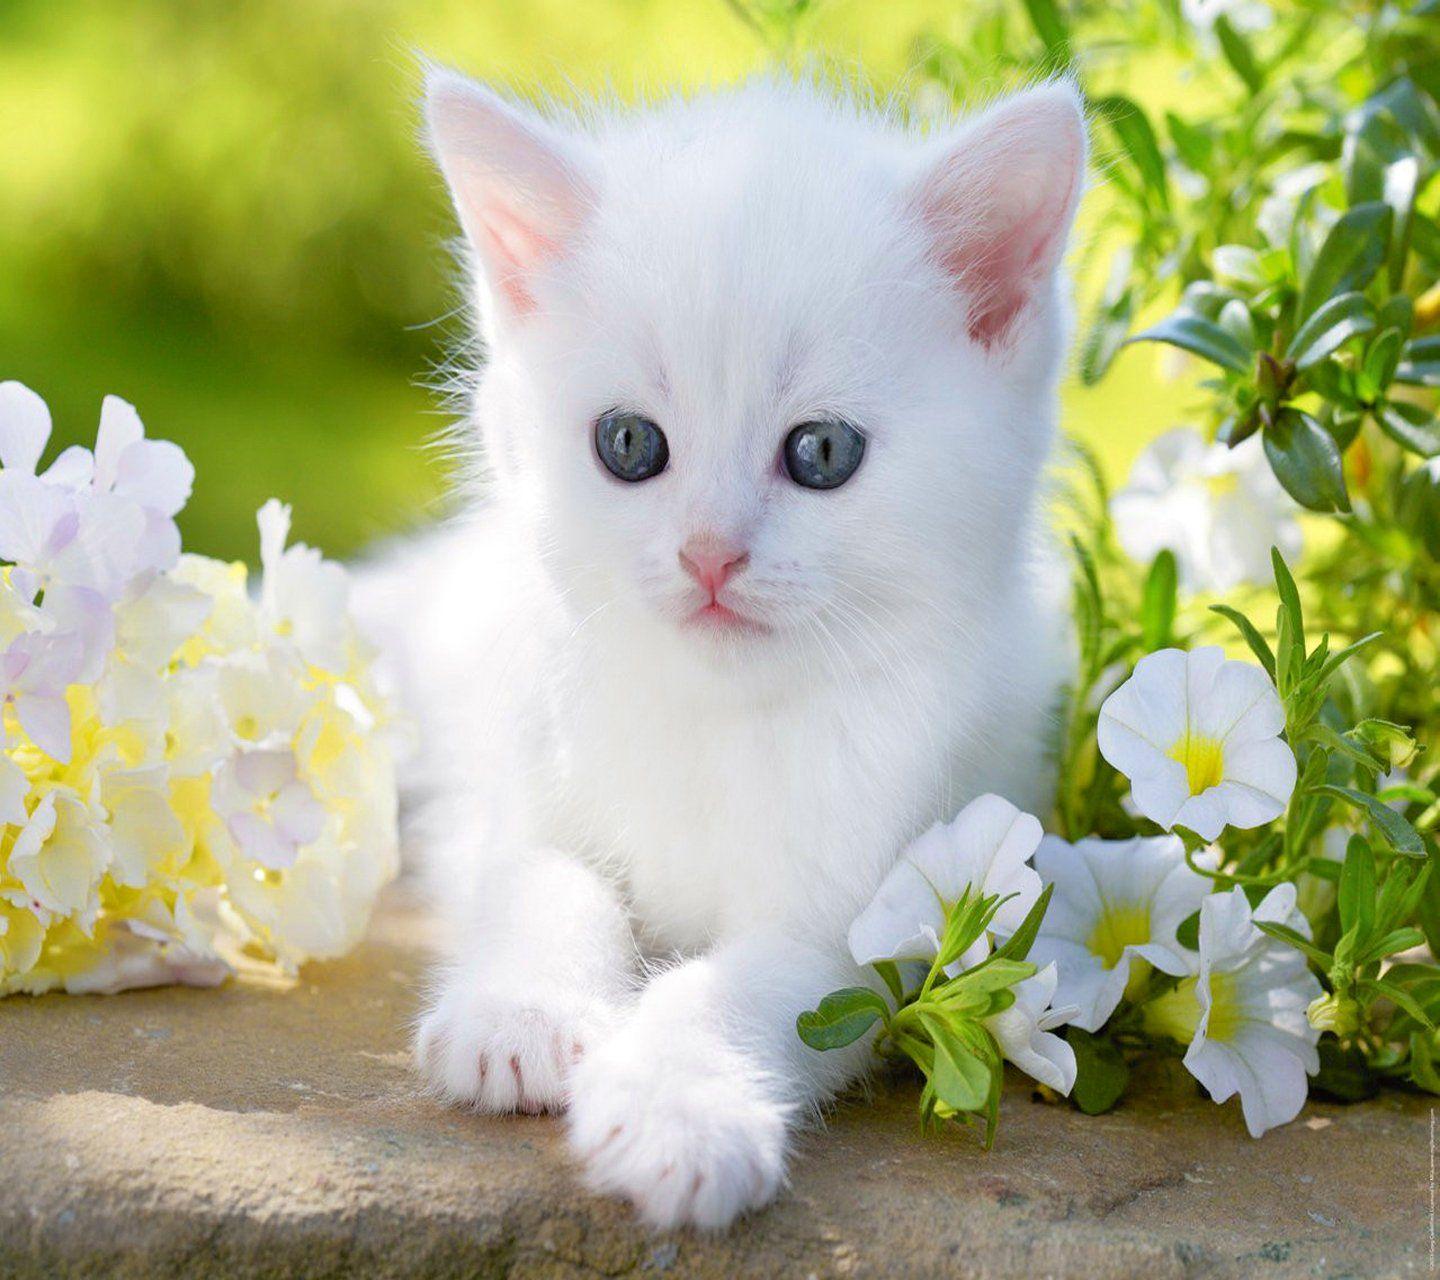 Cute white cat wallpapers for desktop